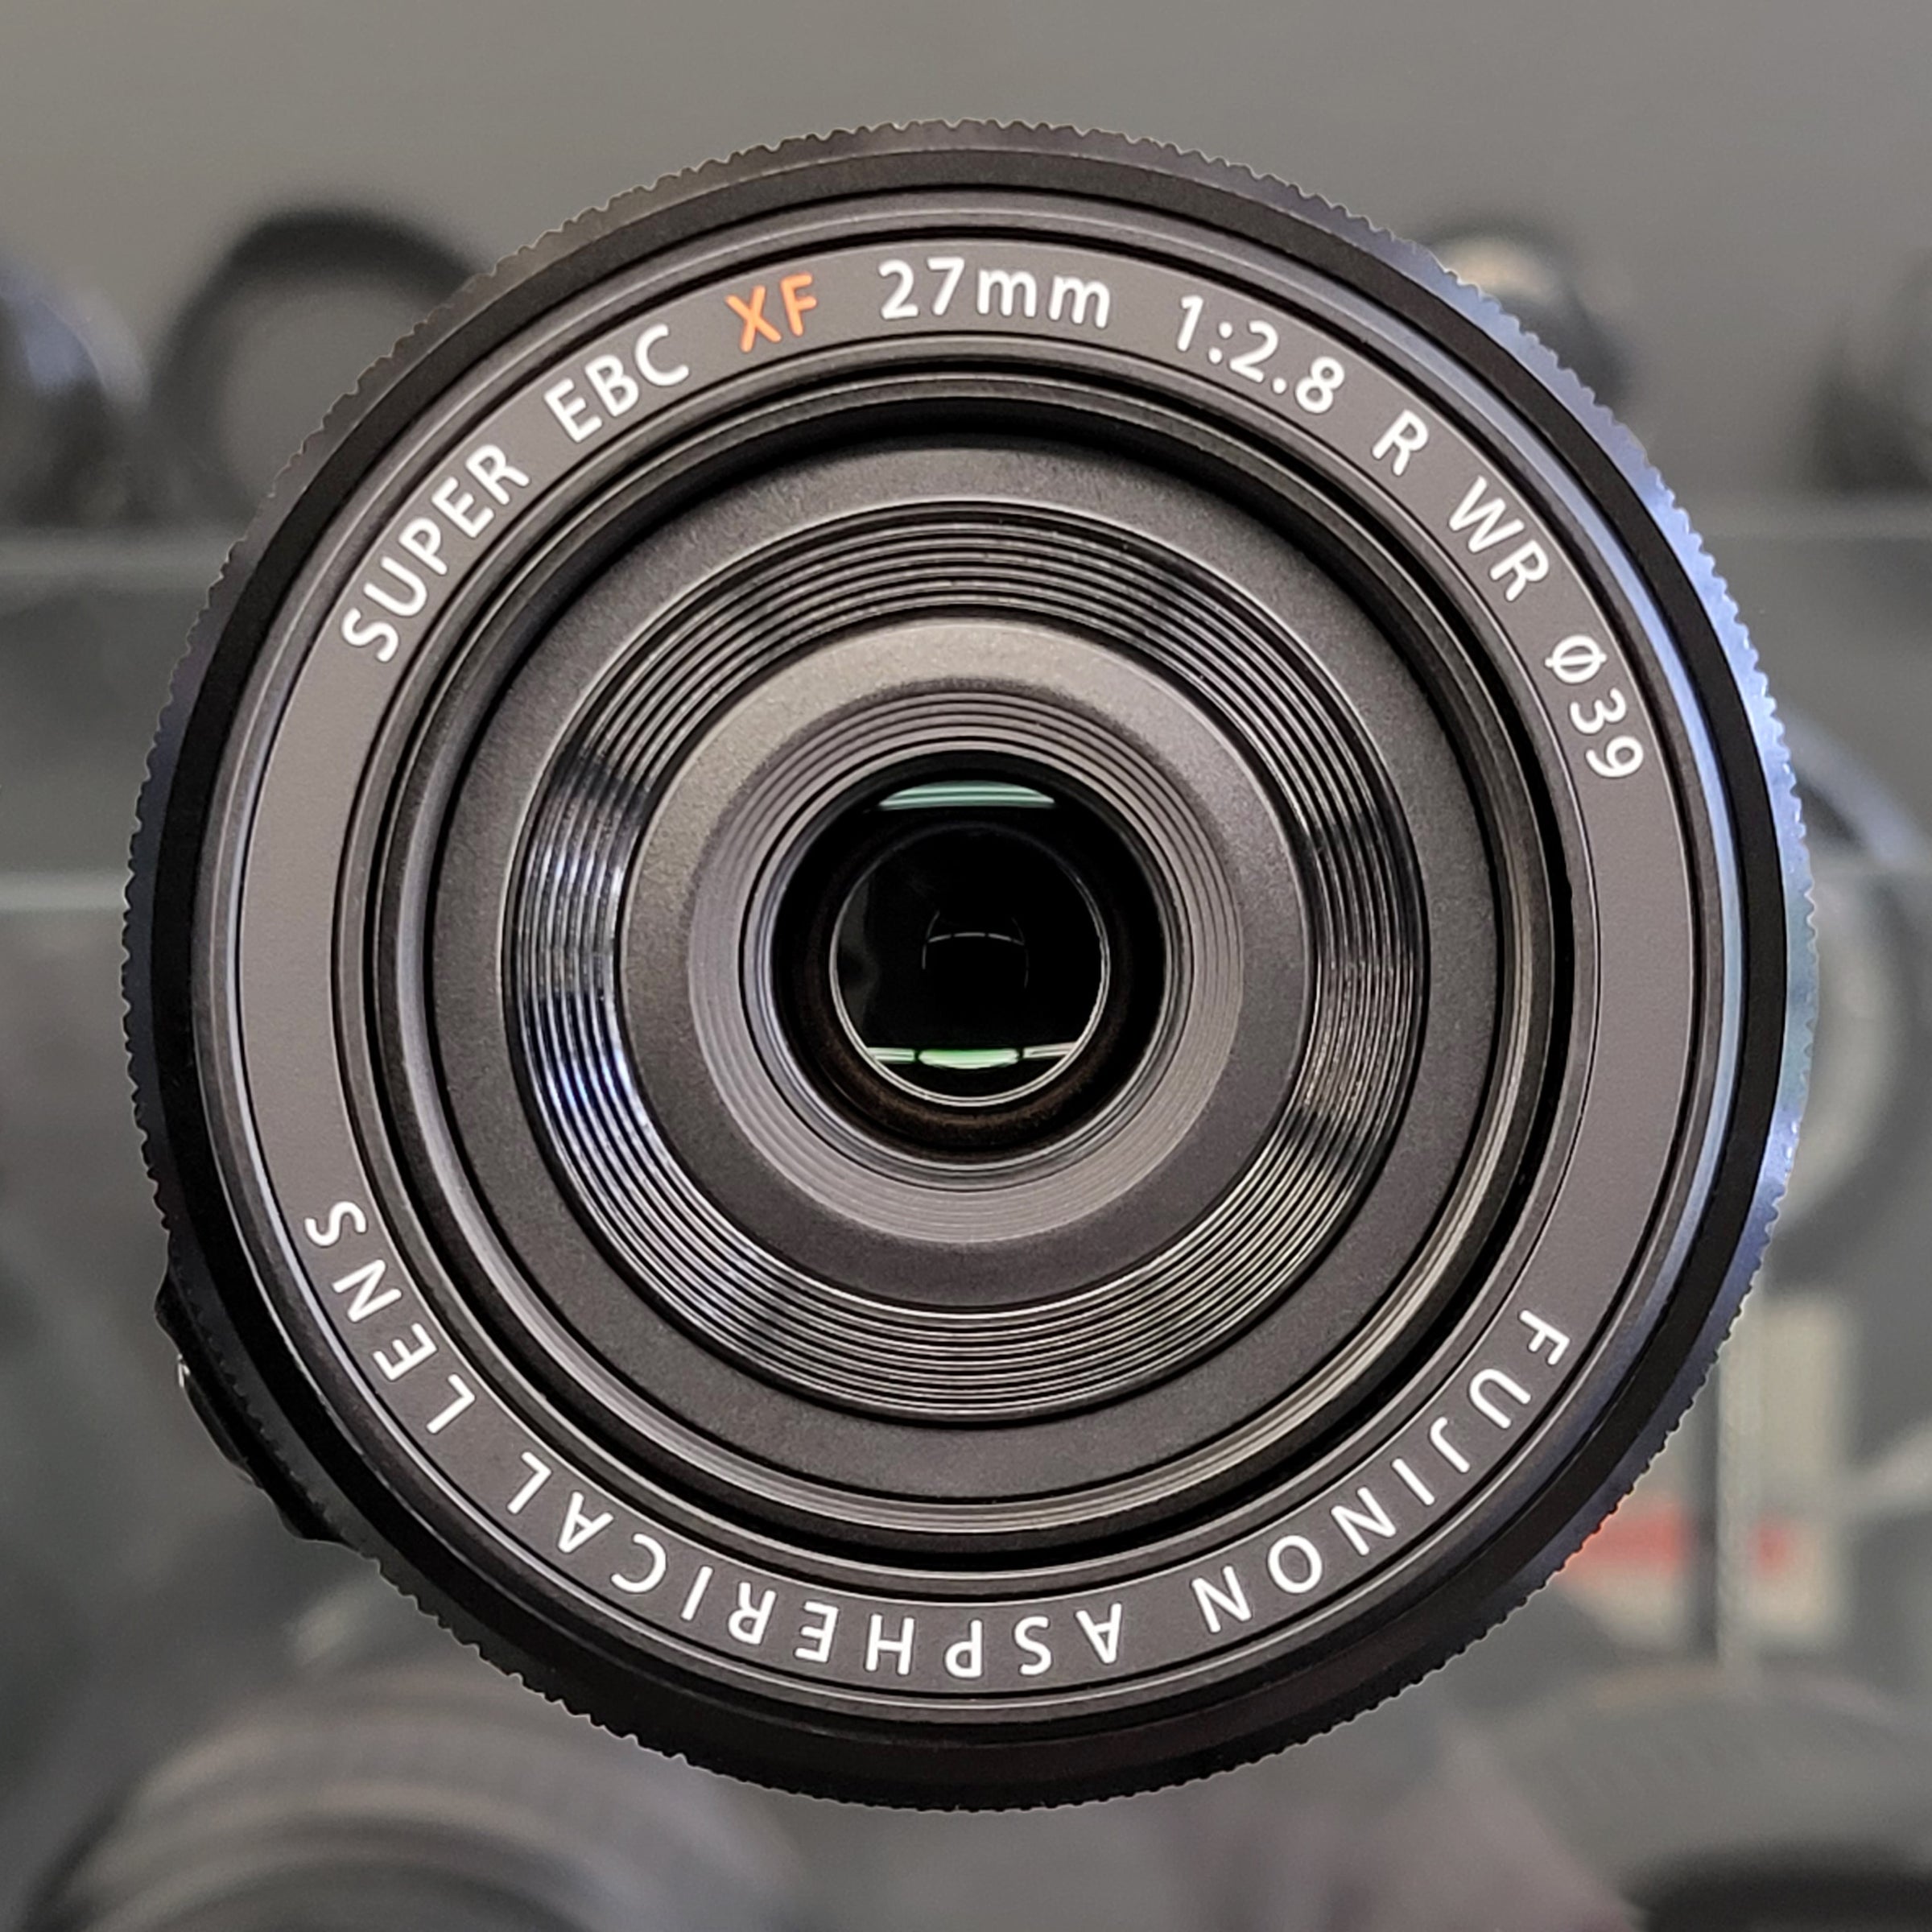 Fujifilm XF 27mm f2. 8 R WR lens back in stock